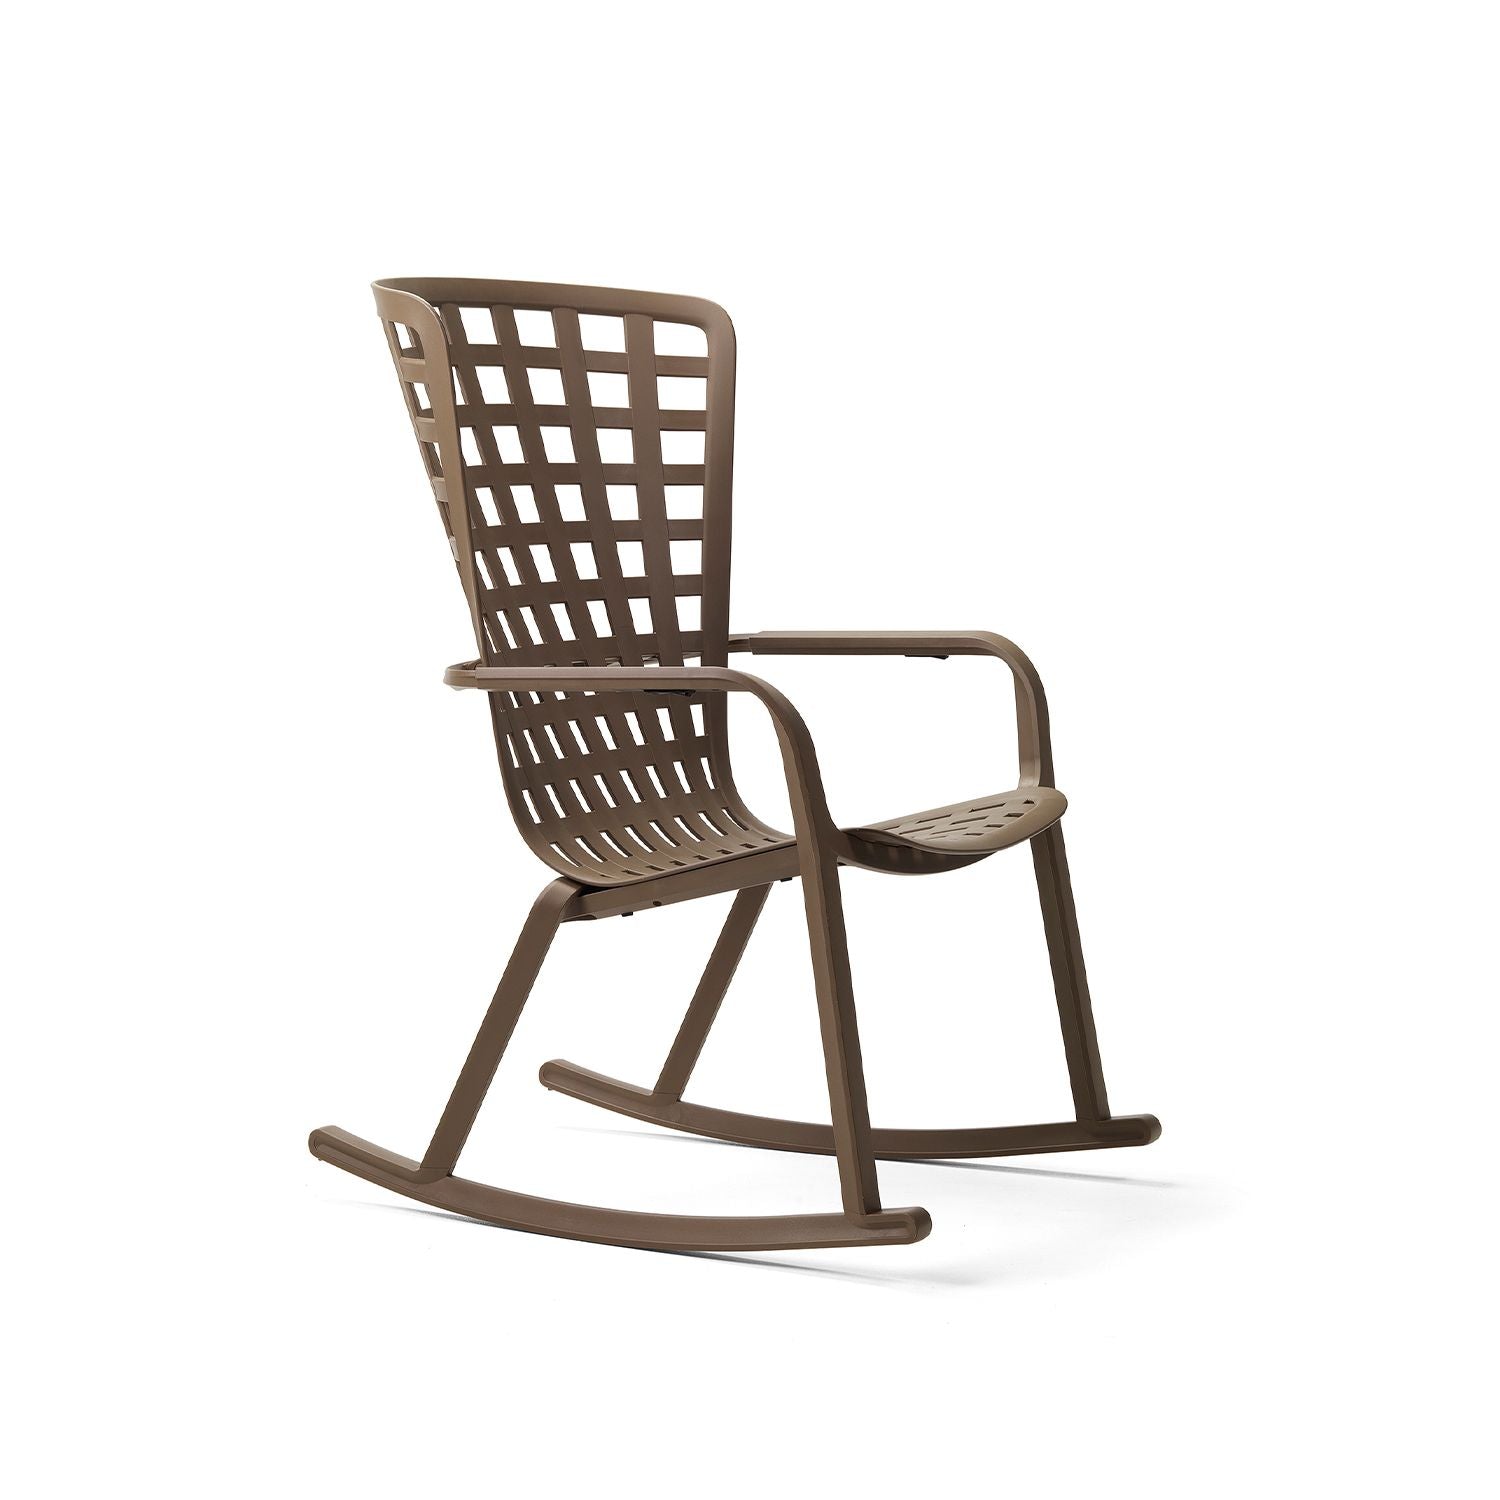 Folio Rocking Chair By Nardi - Tobacco